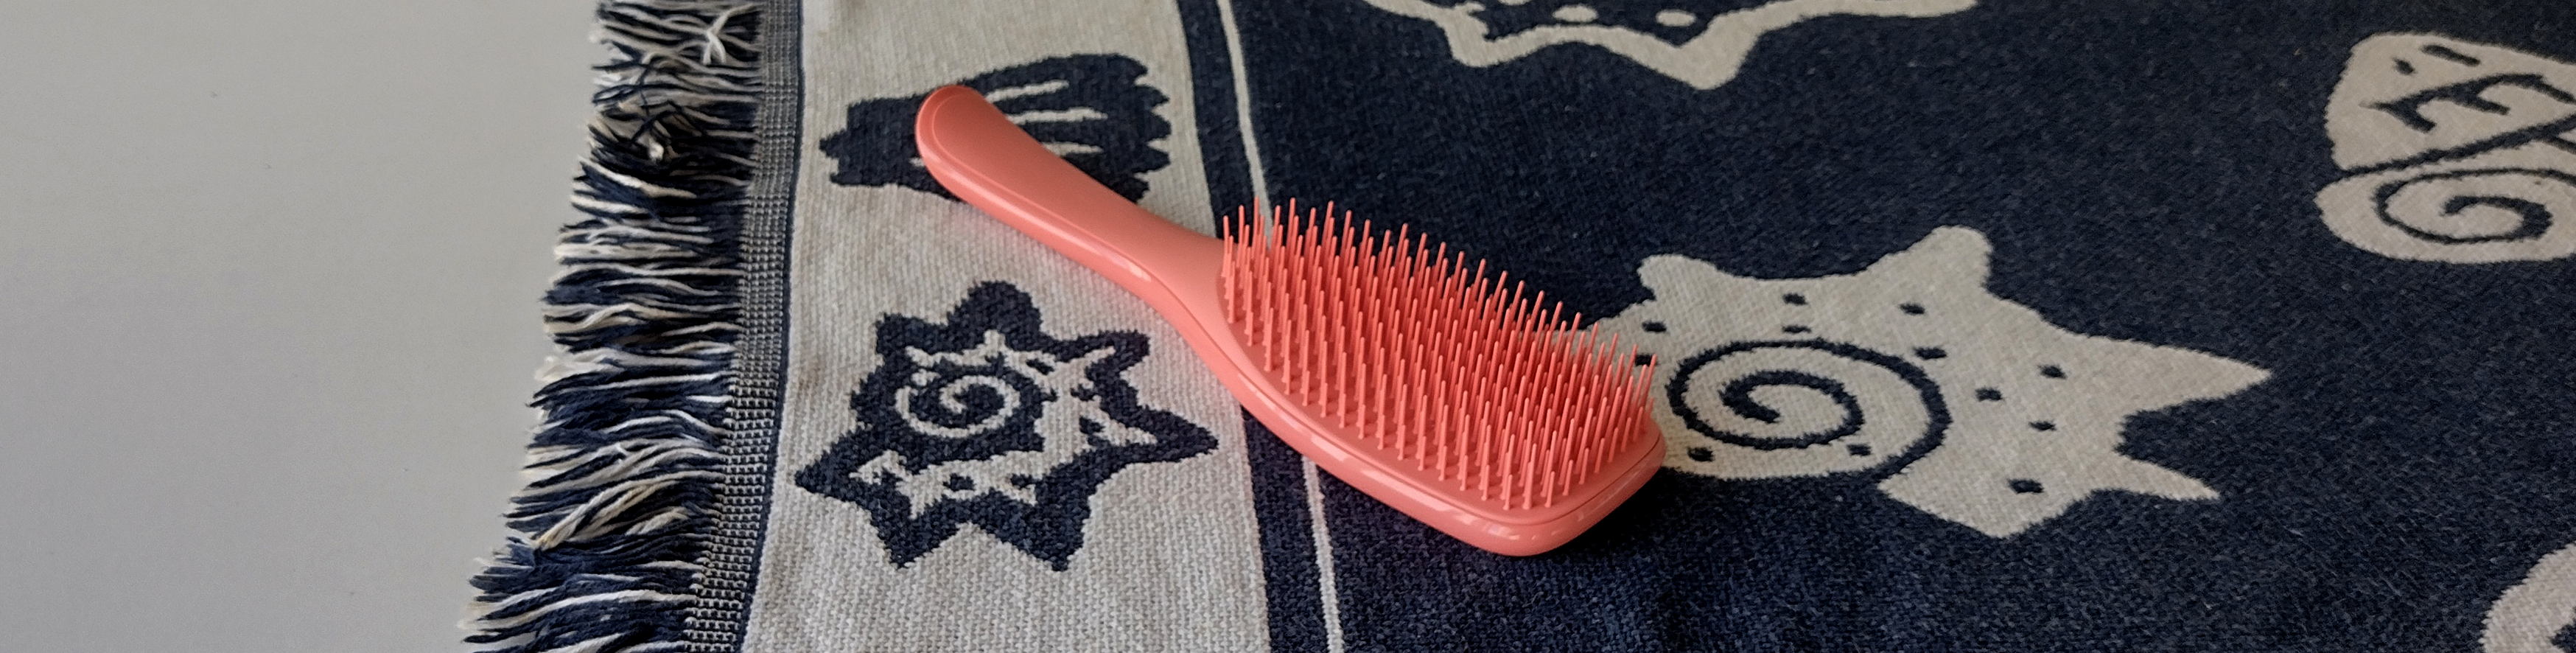 Tangle Teezer cabelos finos e ralos (pente ou escova para cabelos cacheados)